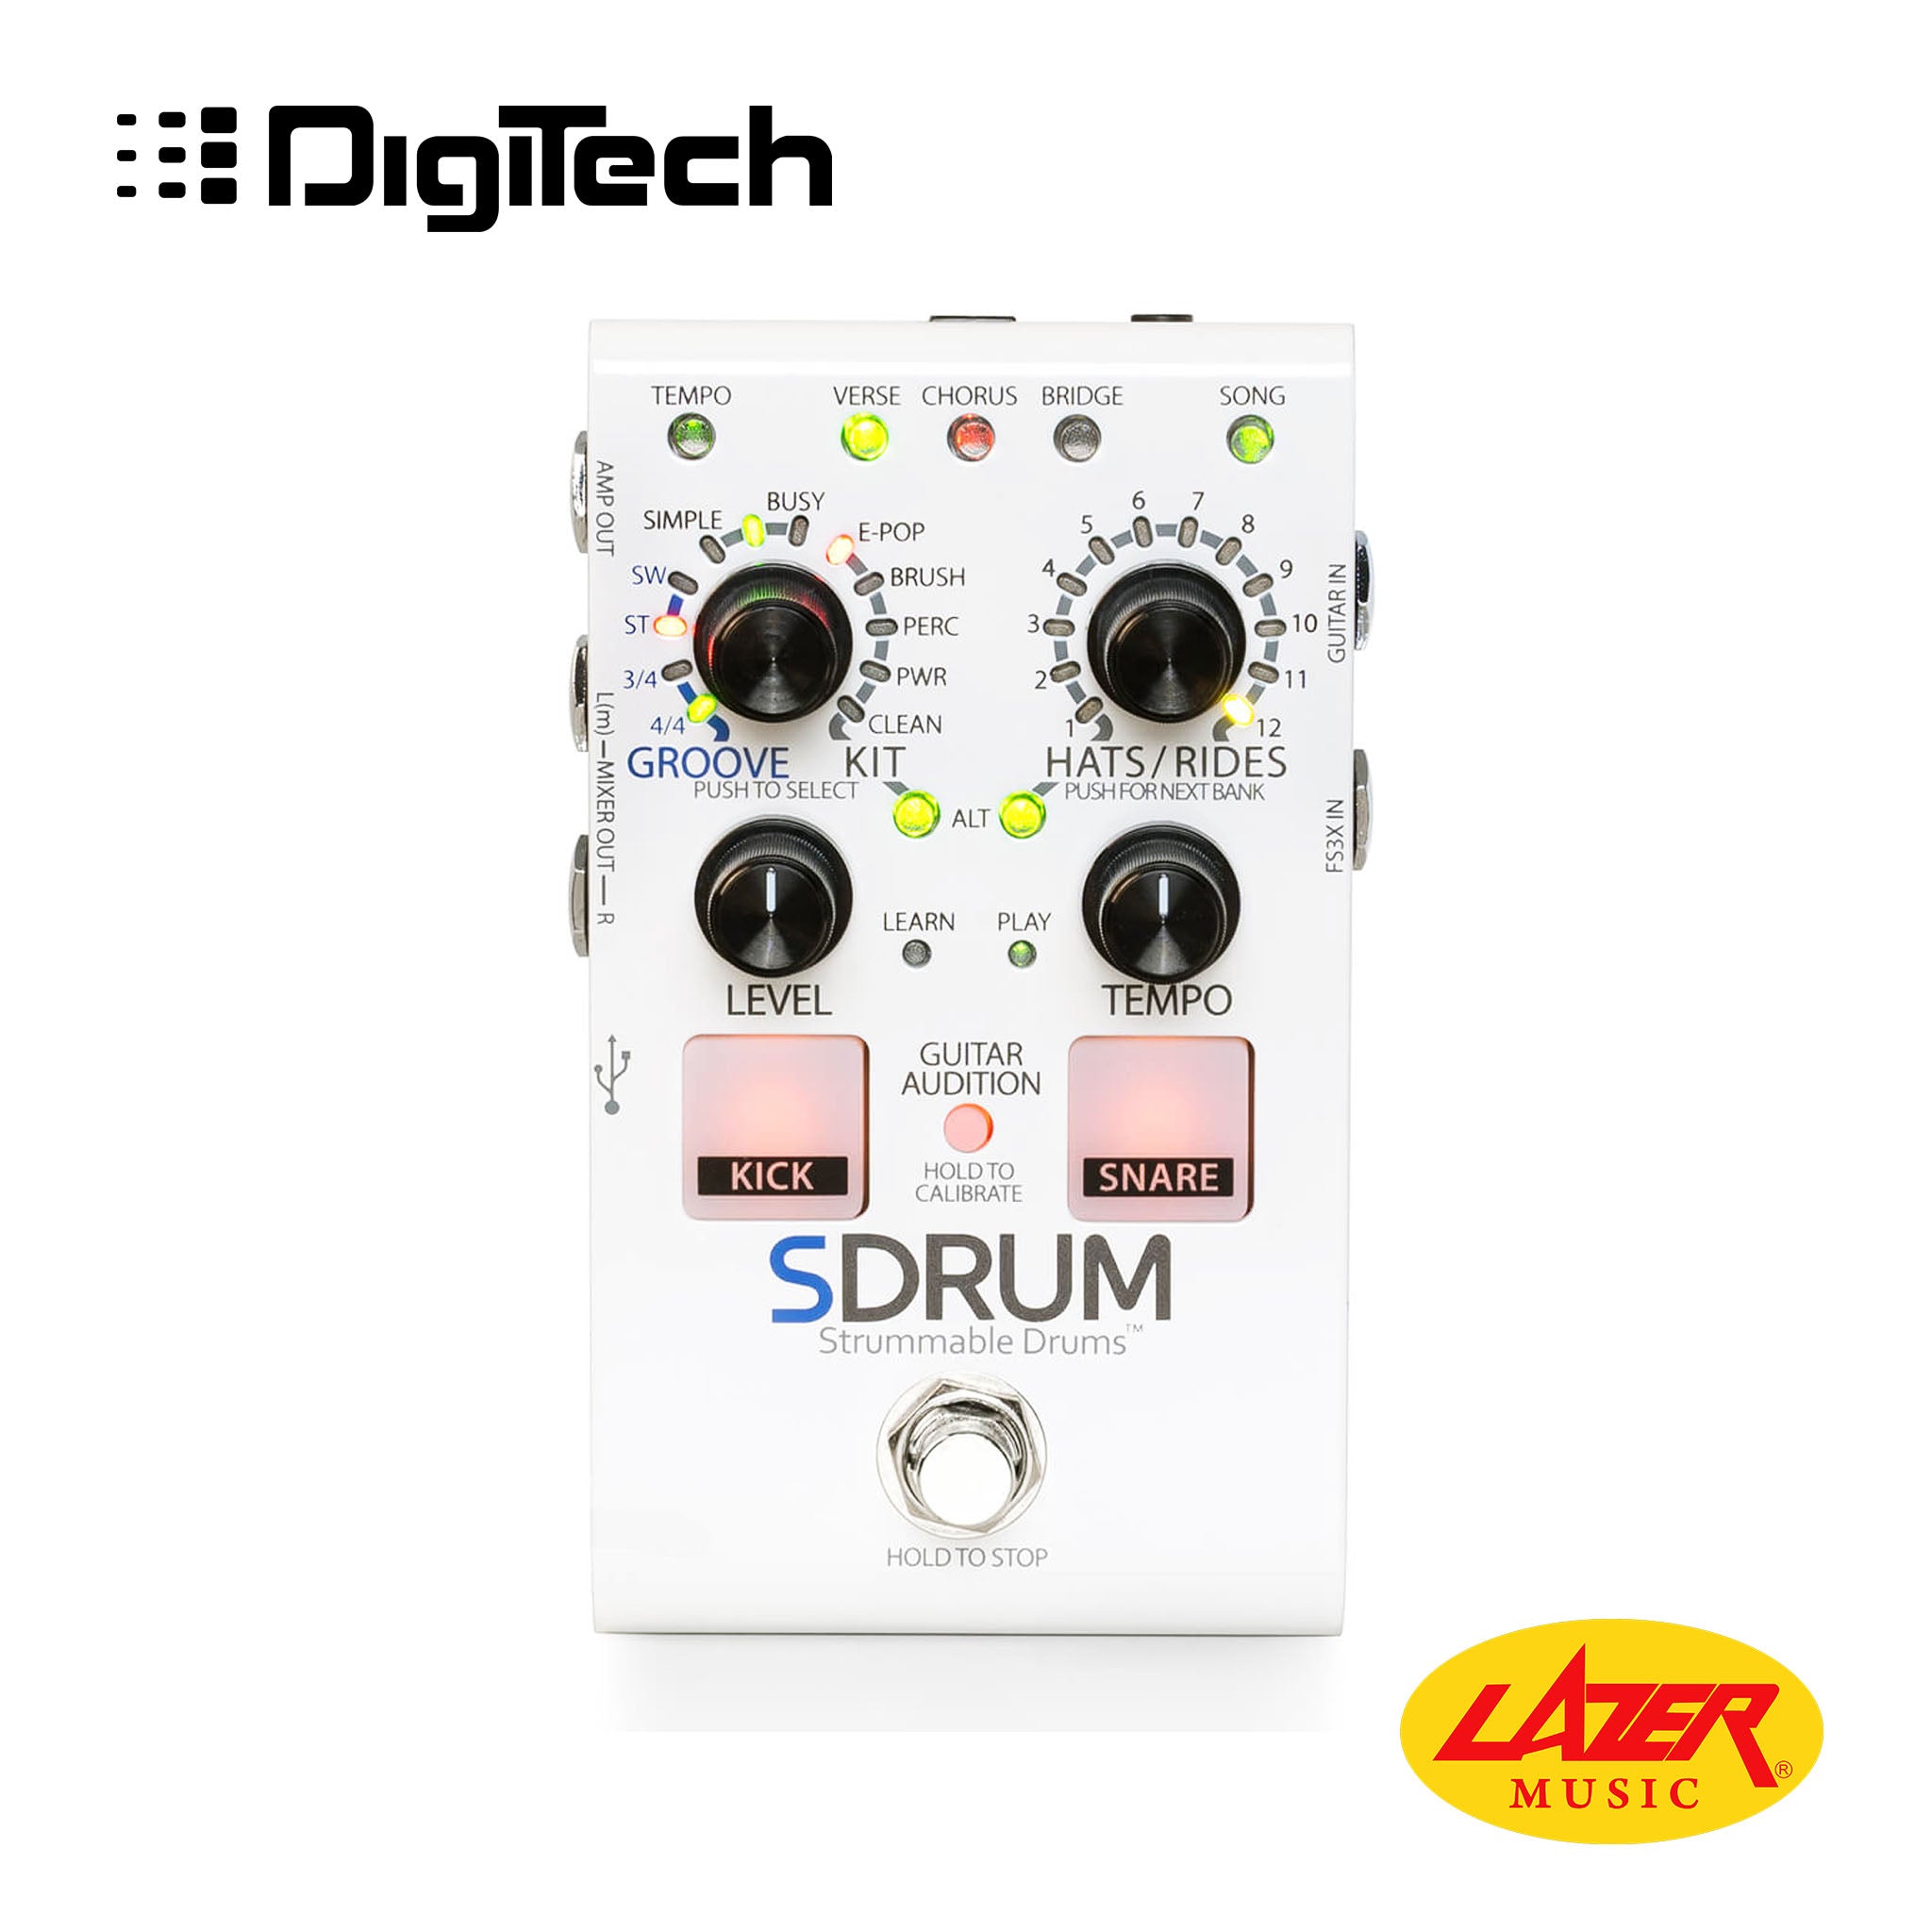 DigiTech SDRUM Beathscratch Technology Strummable Drums Effects Pedal